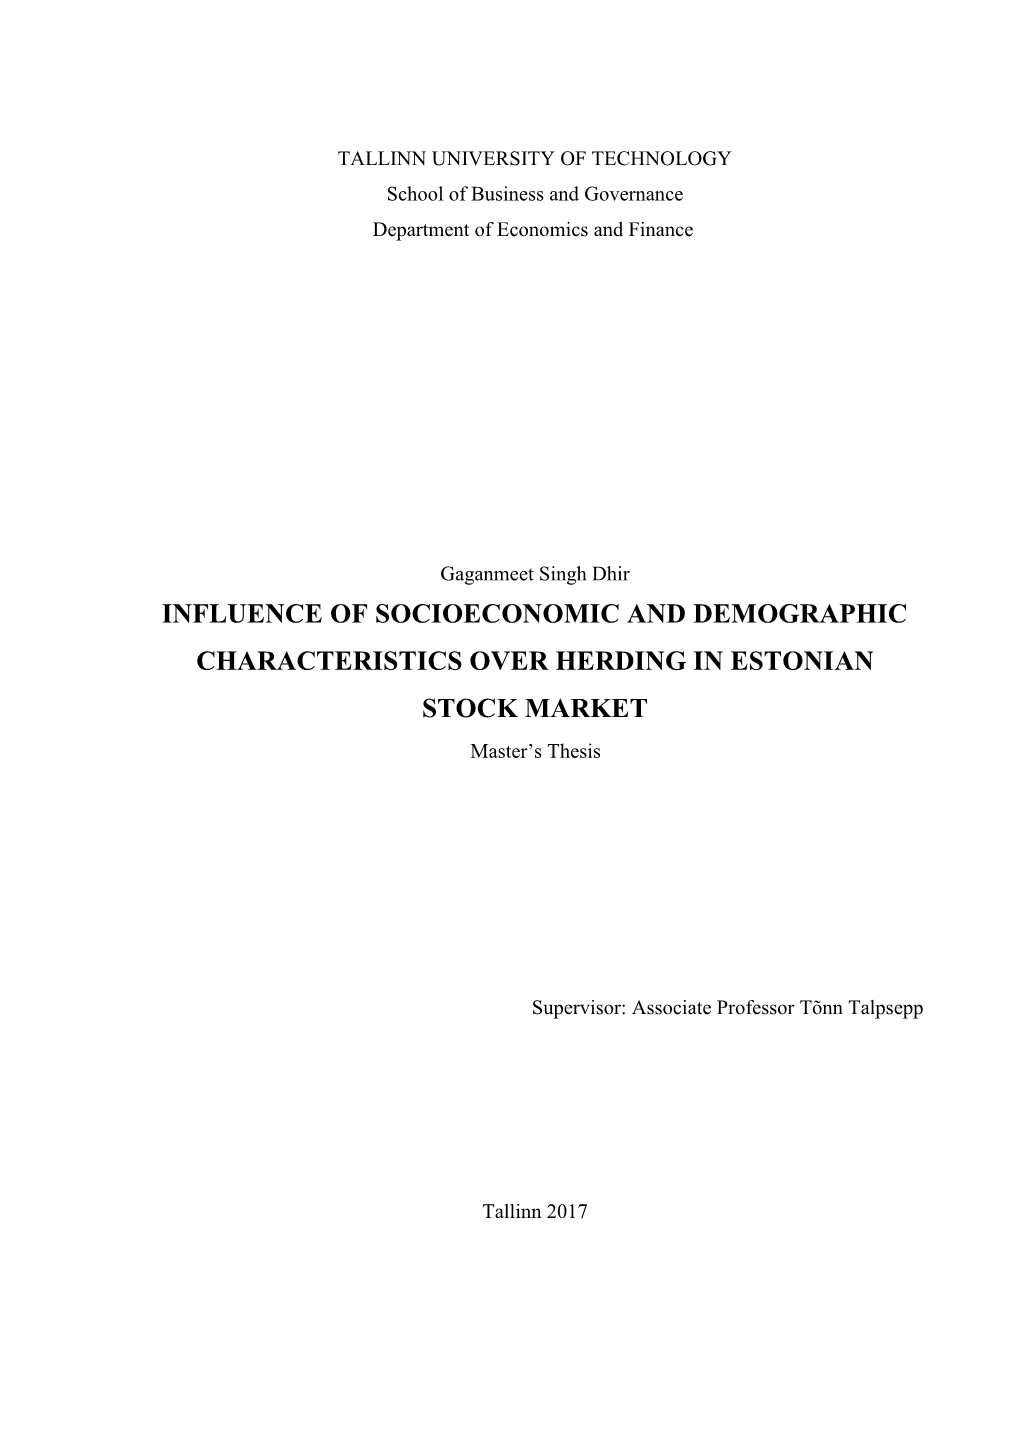 INFLUENCE of SOCIOECONOMIC and DEMOGRAPHIC CHARACTERISTICS OVER HERDING in ESTONIAN STOCK MARKET Master’S Thesis